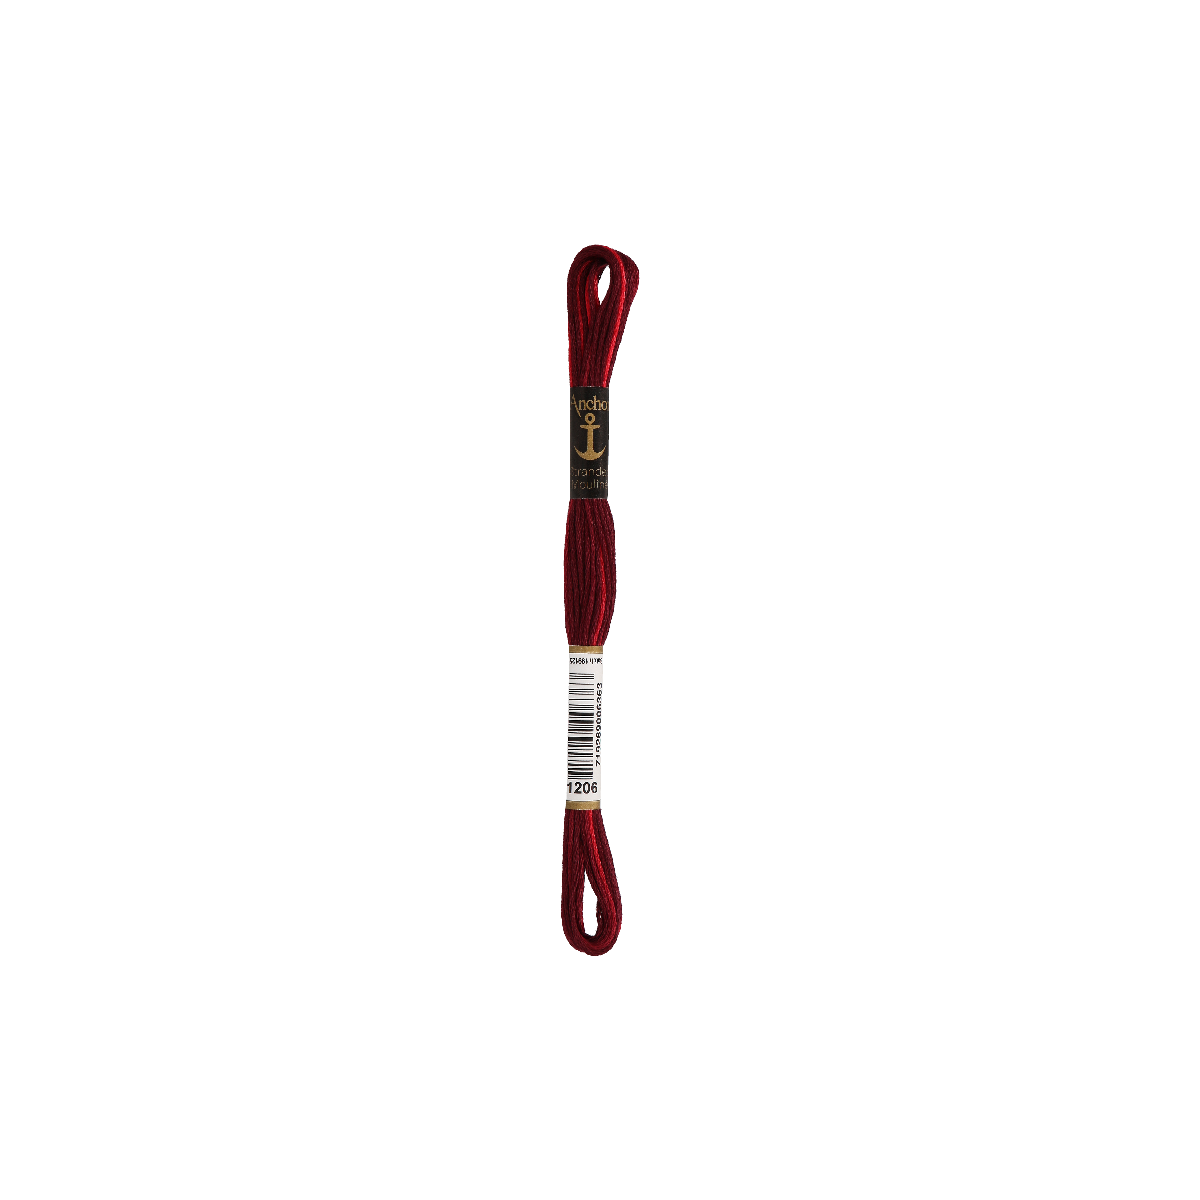 Anchor Sticktwist 8m, dkl rood ombre, katoen, kleur 1206,...